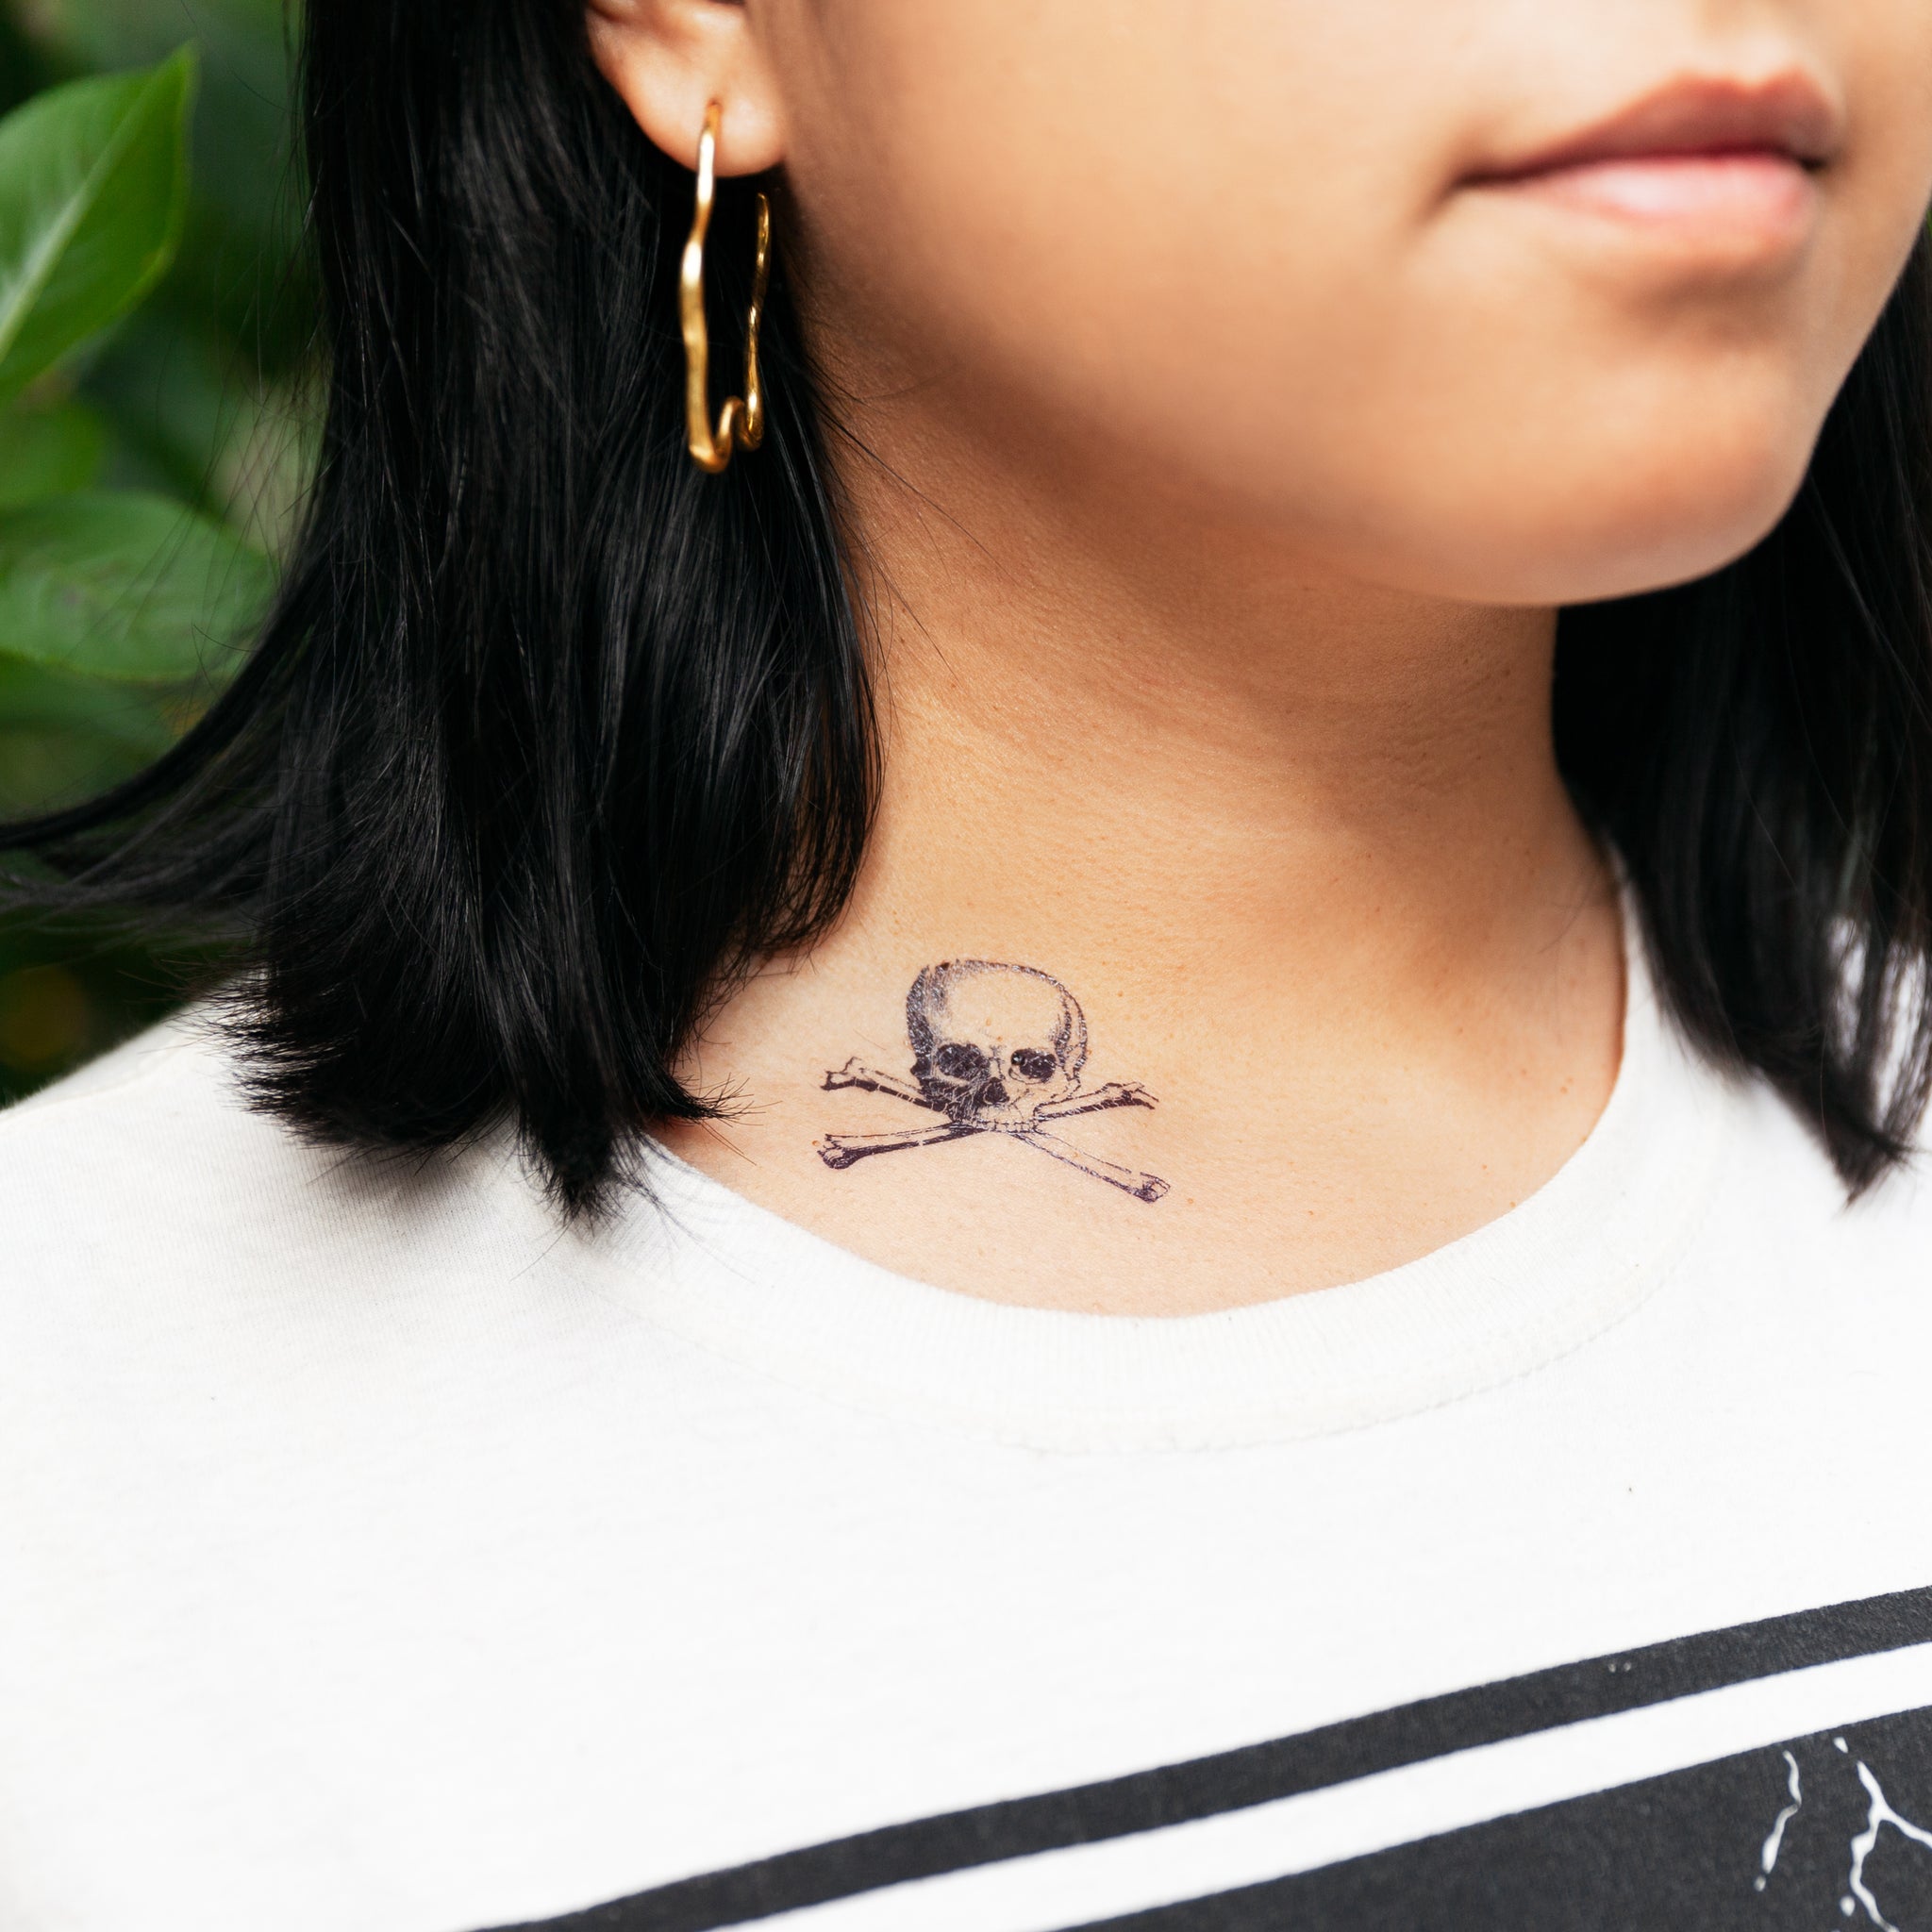 Share 171+ small skull tattoos latest